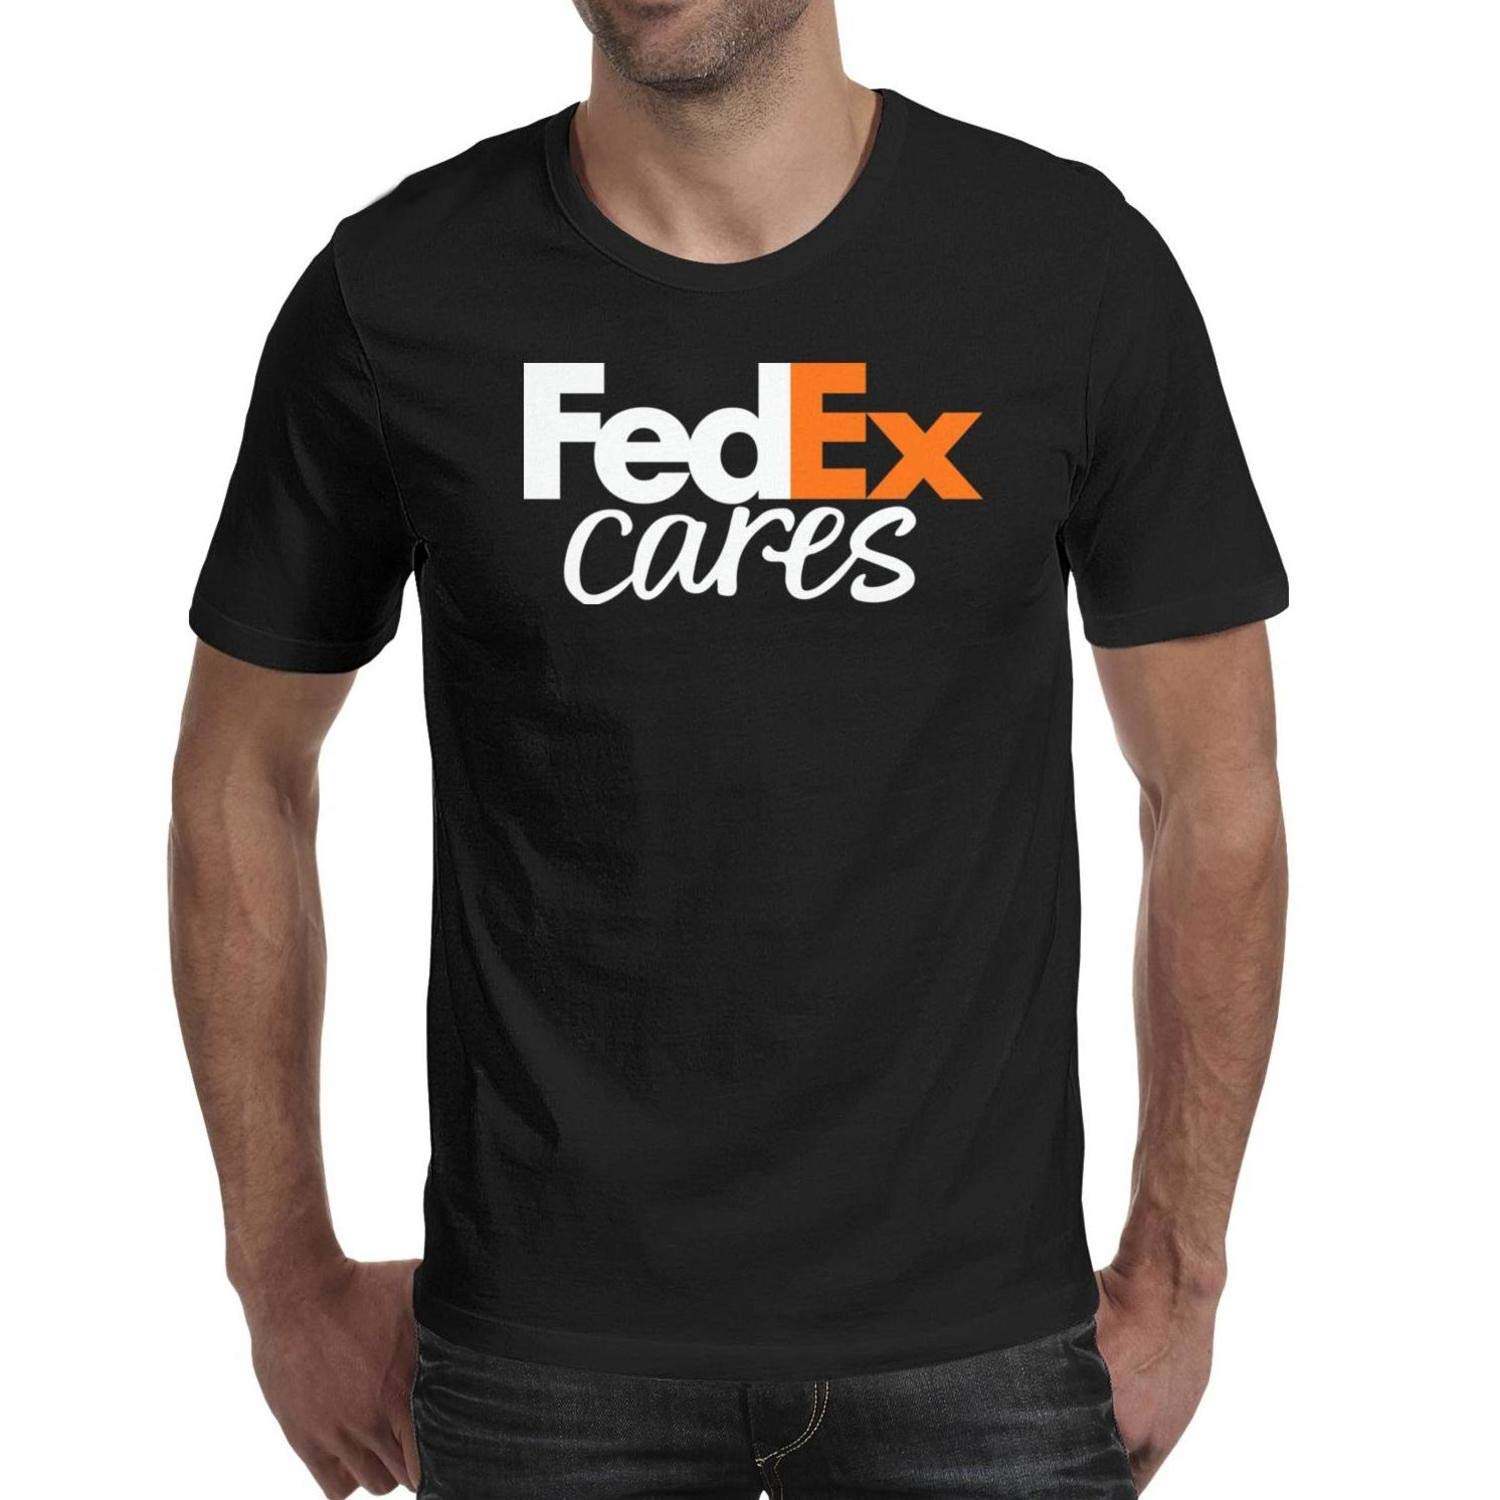 fedex clothing website